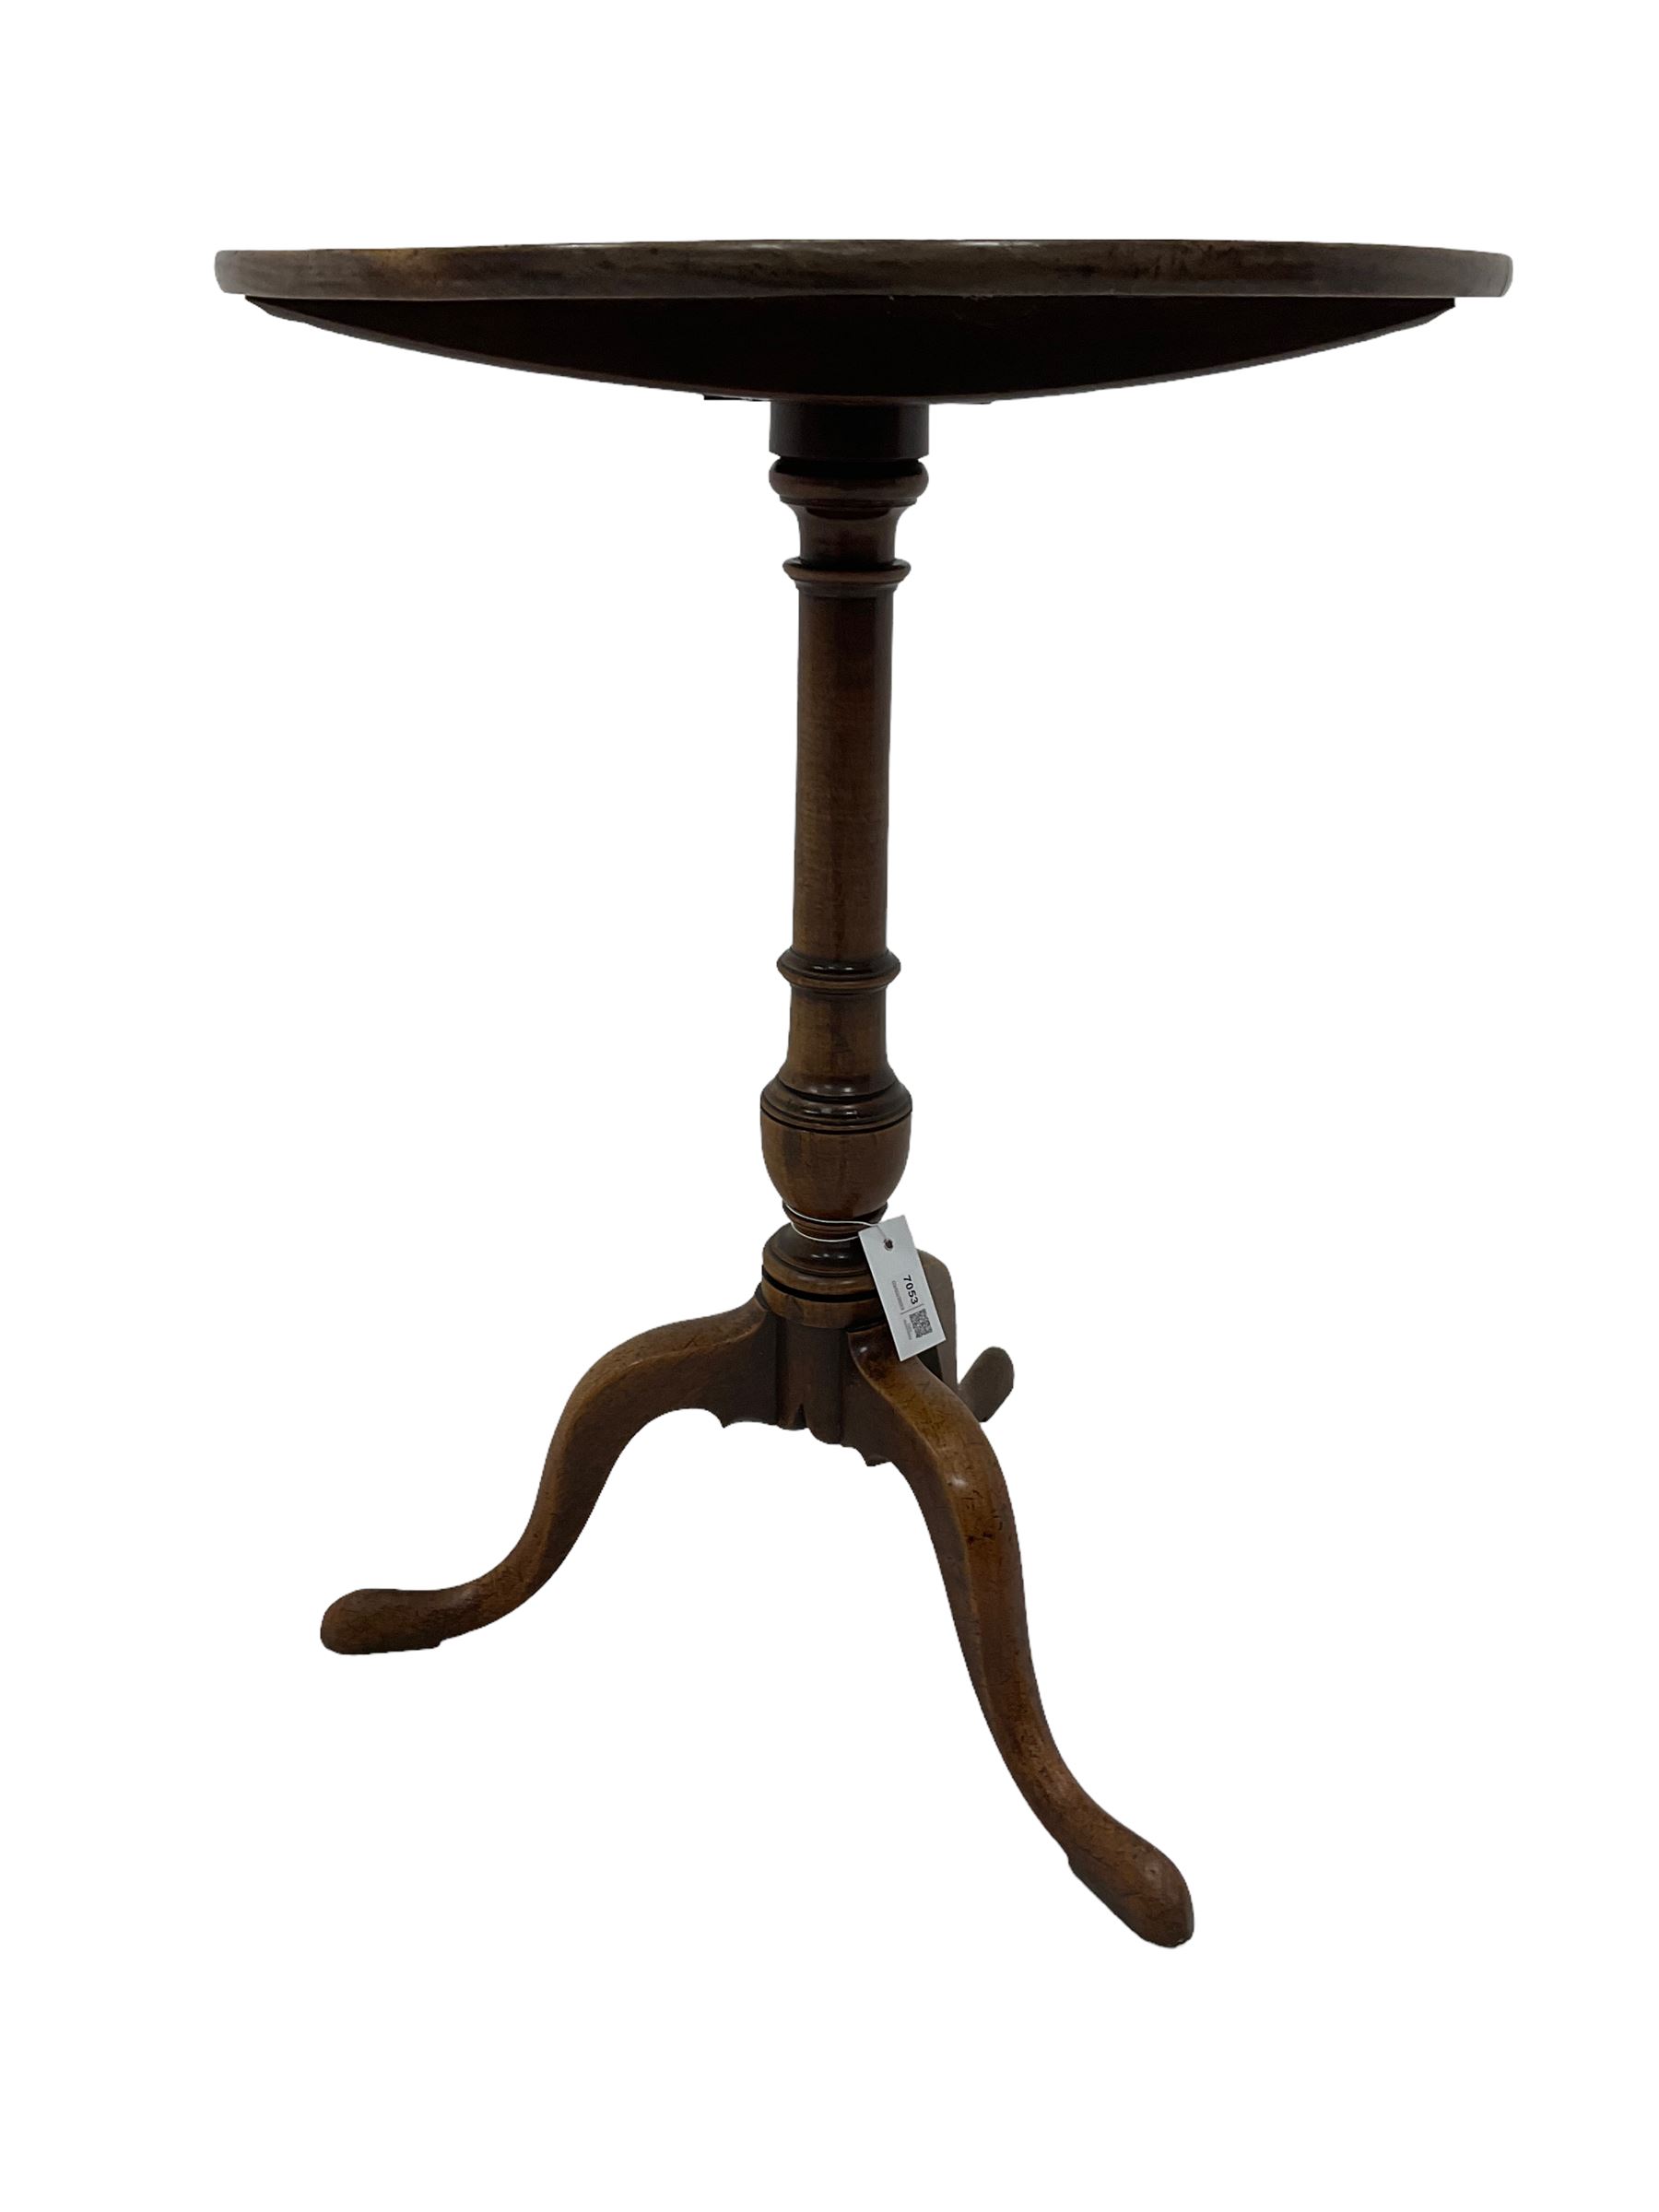 Late George III mahogany circular tilt-top occasional table - Image 2 of 5